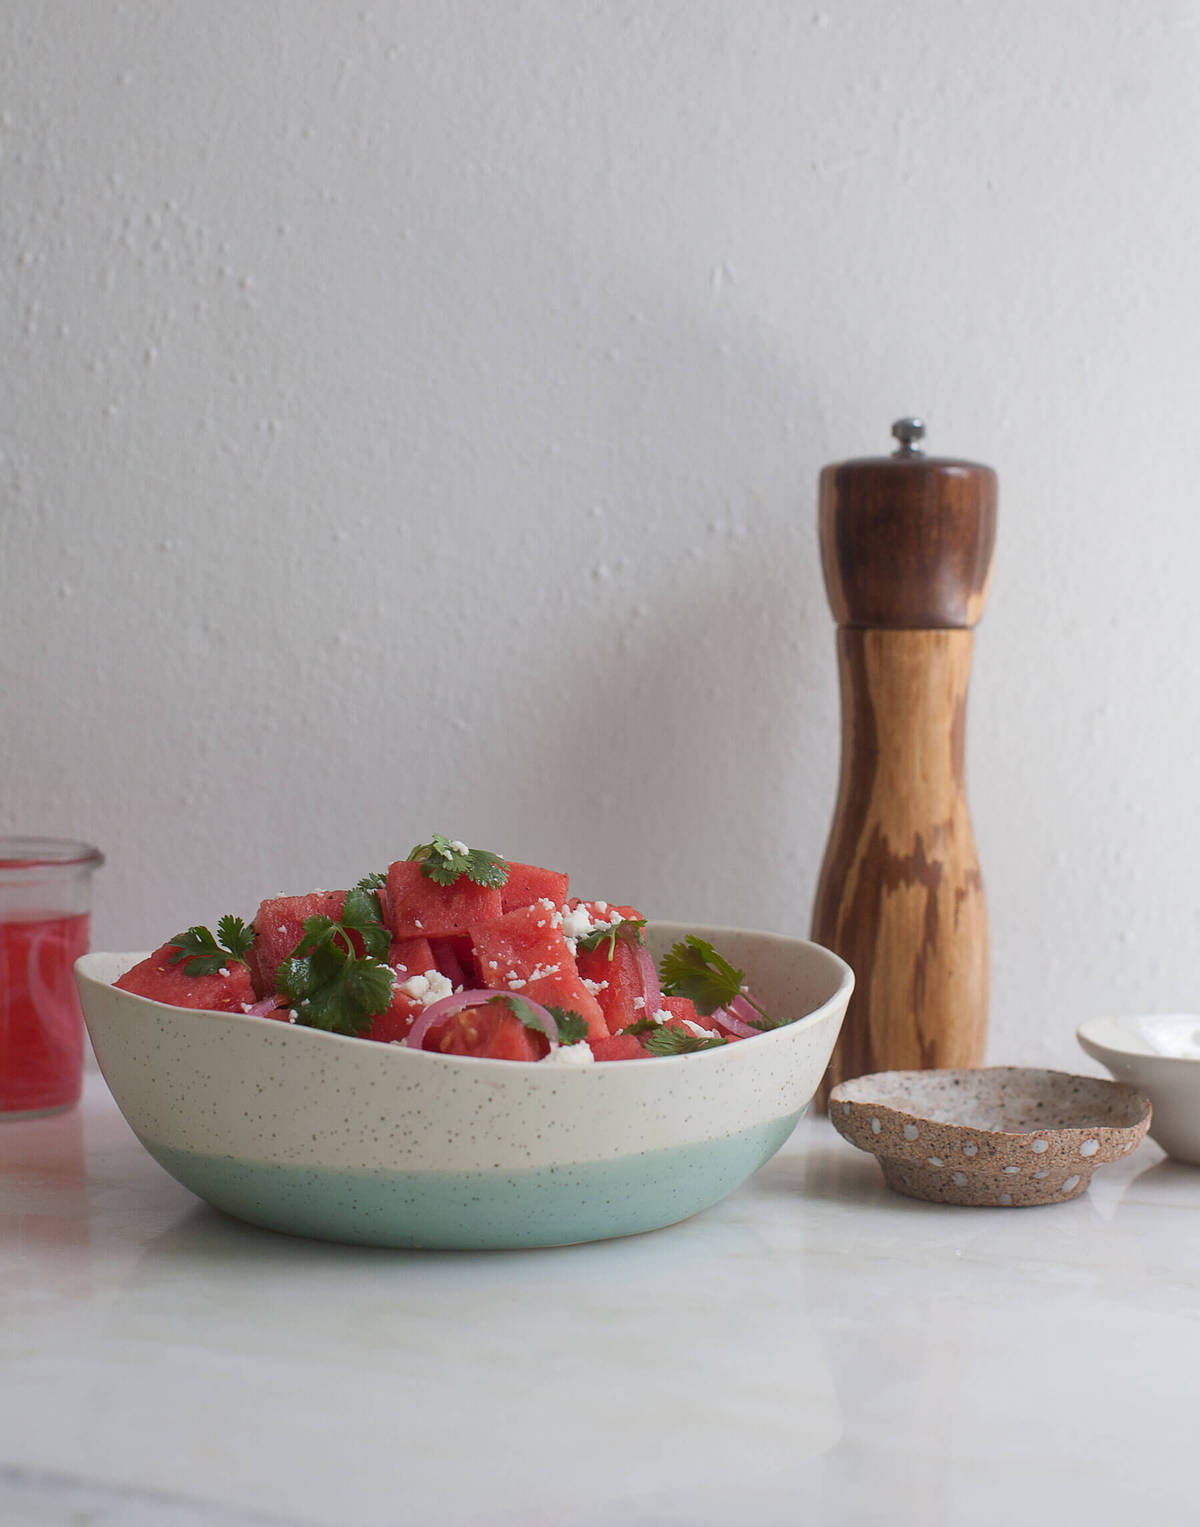 Watermelon salad (w/ queso fresco & pickled onion)…that isn’t basic